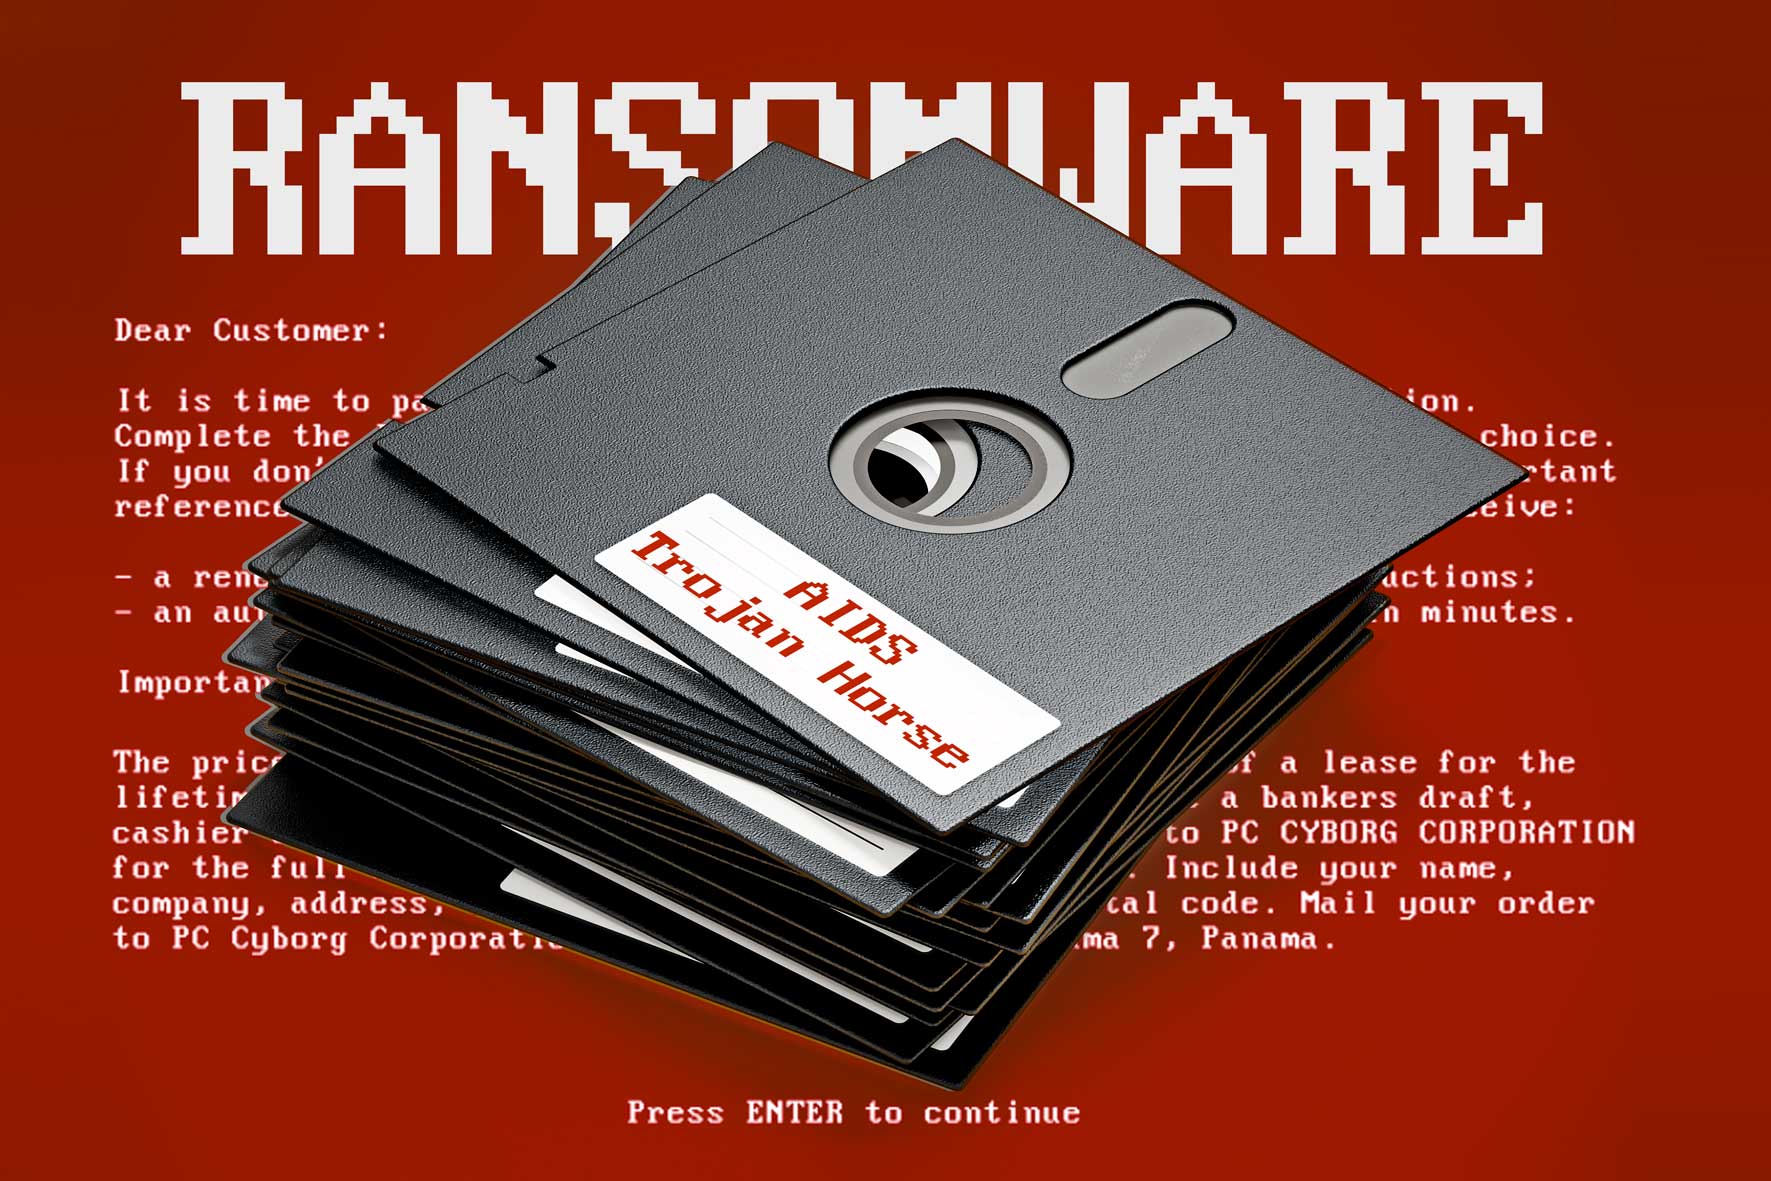 Hablamos del primer ataque de ciberseguridad de tipo ransomware en L’Altra Ràdio